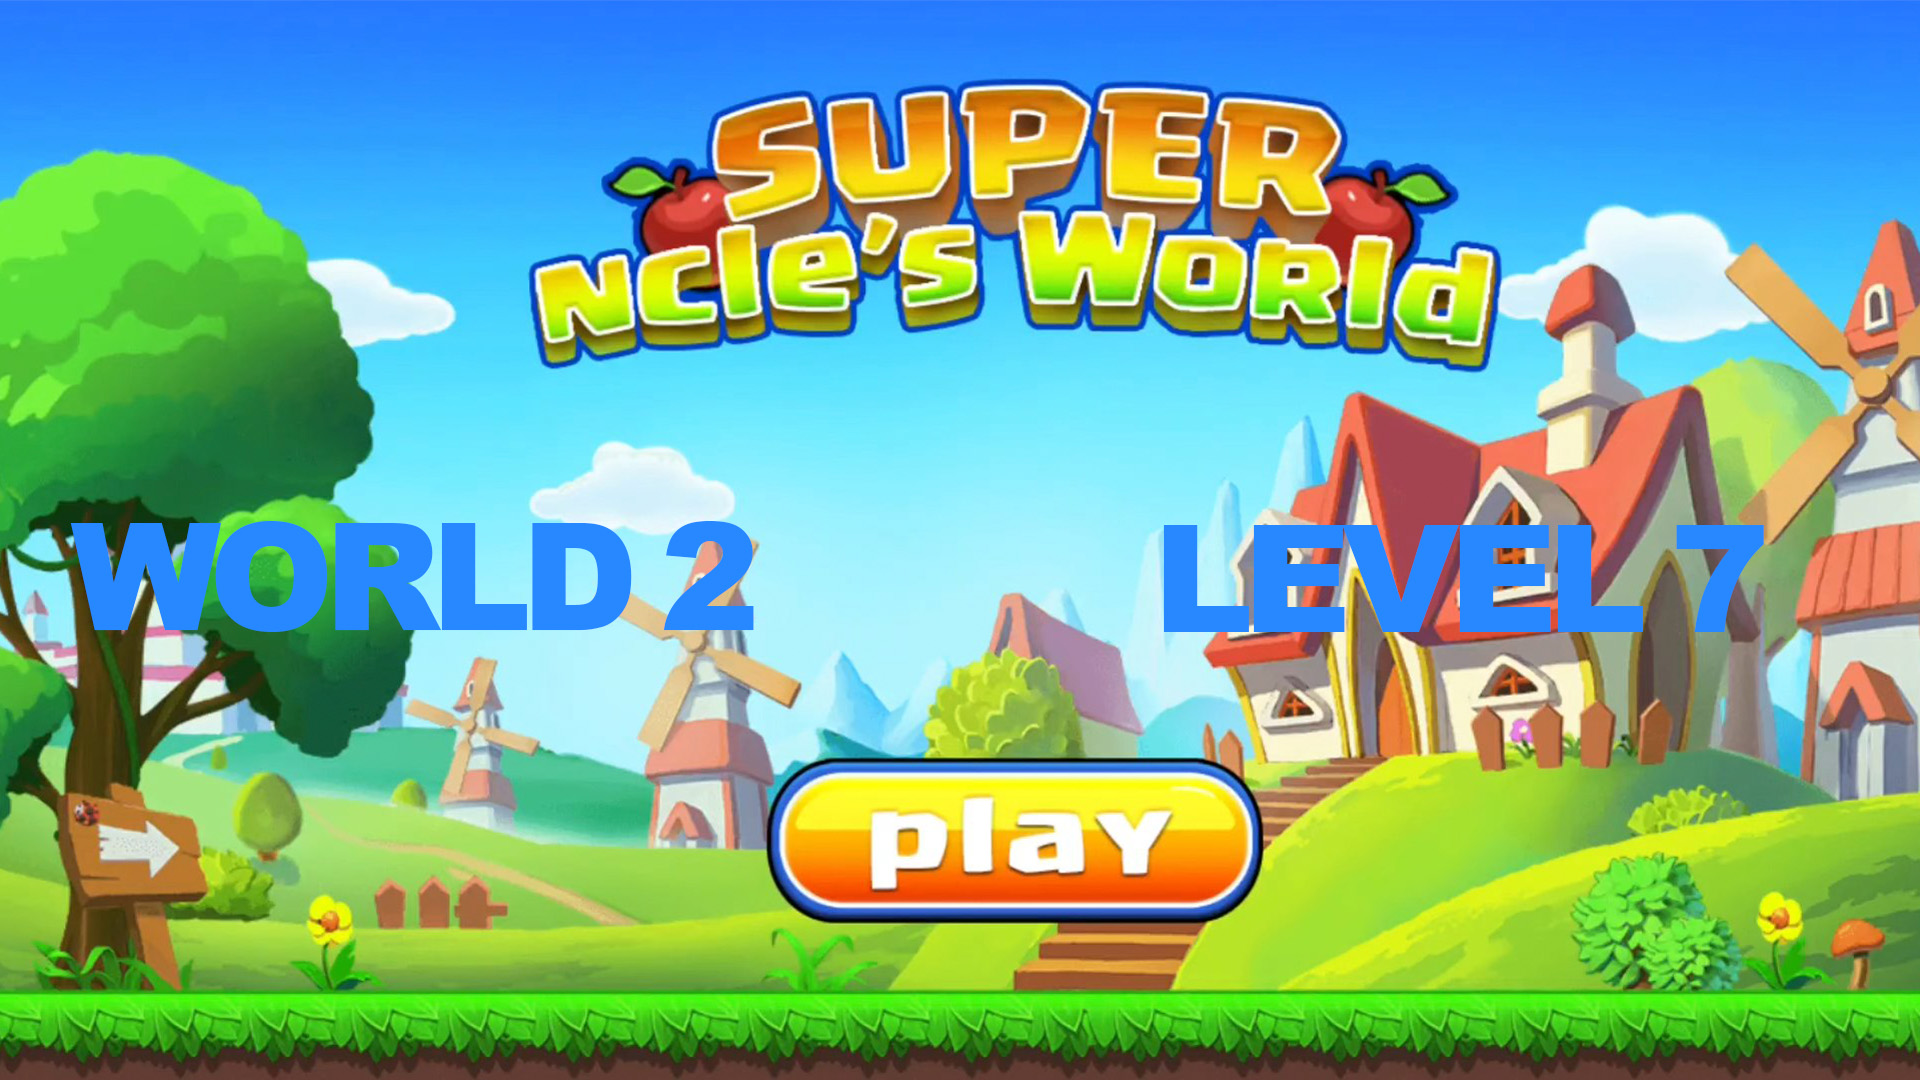 Super ncle's  World 2. levei 7.